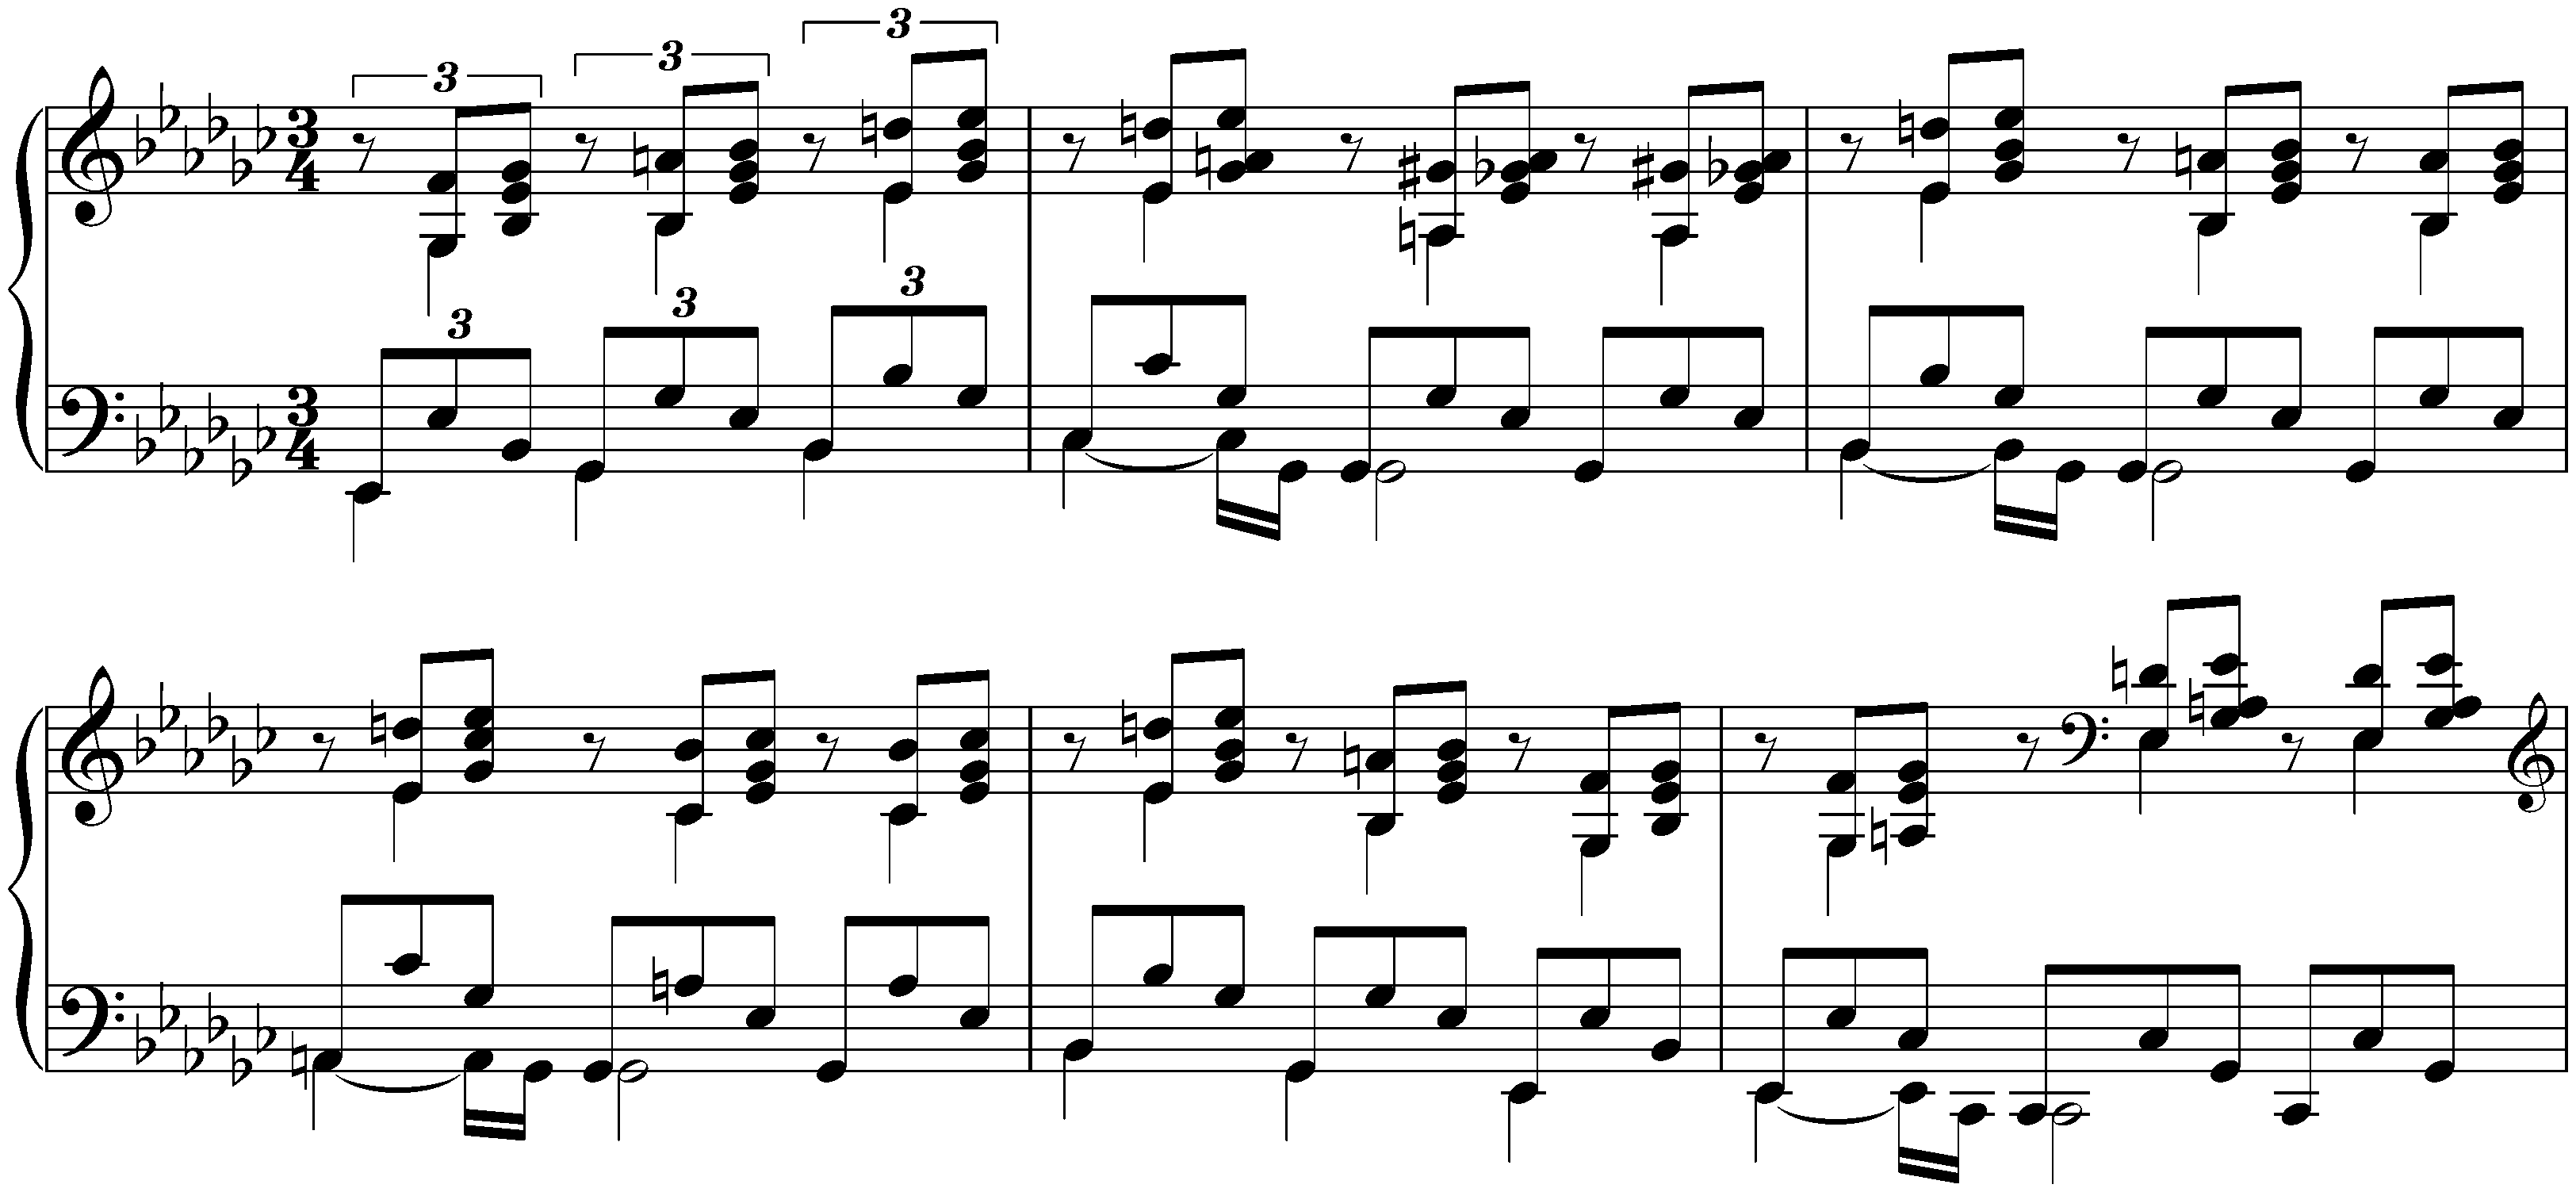 Sonata in E-flat minor, WoO 19; 1.